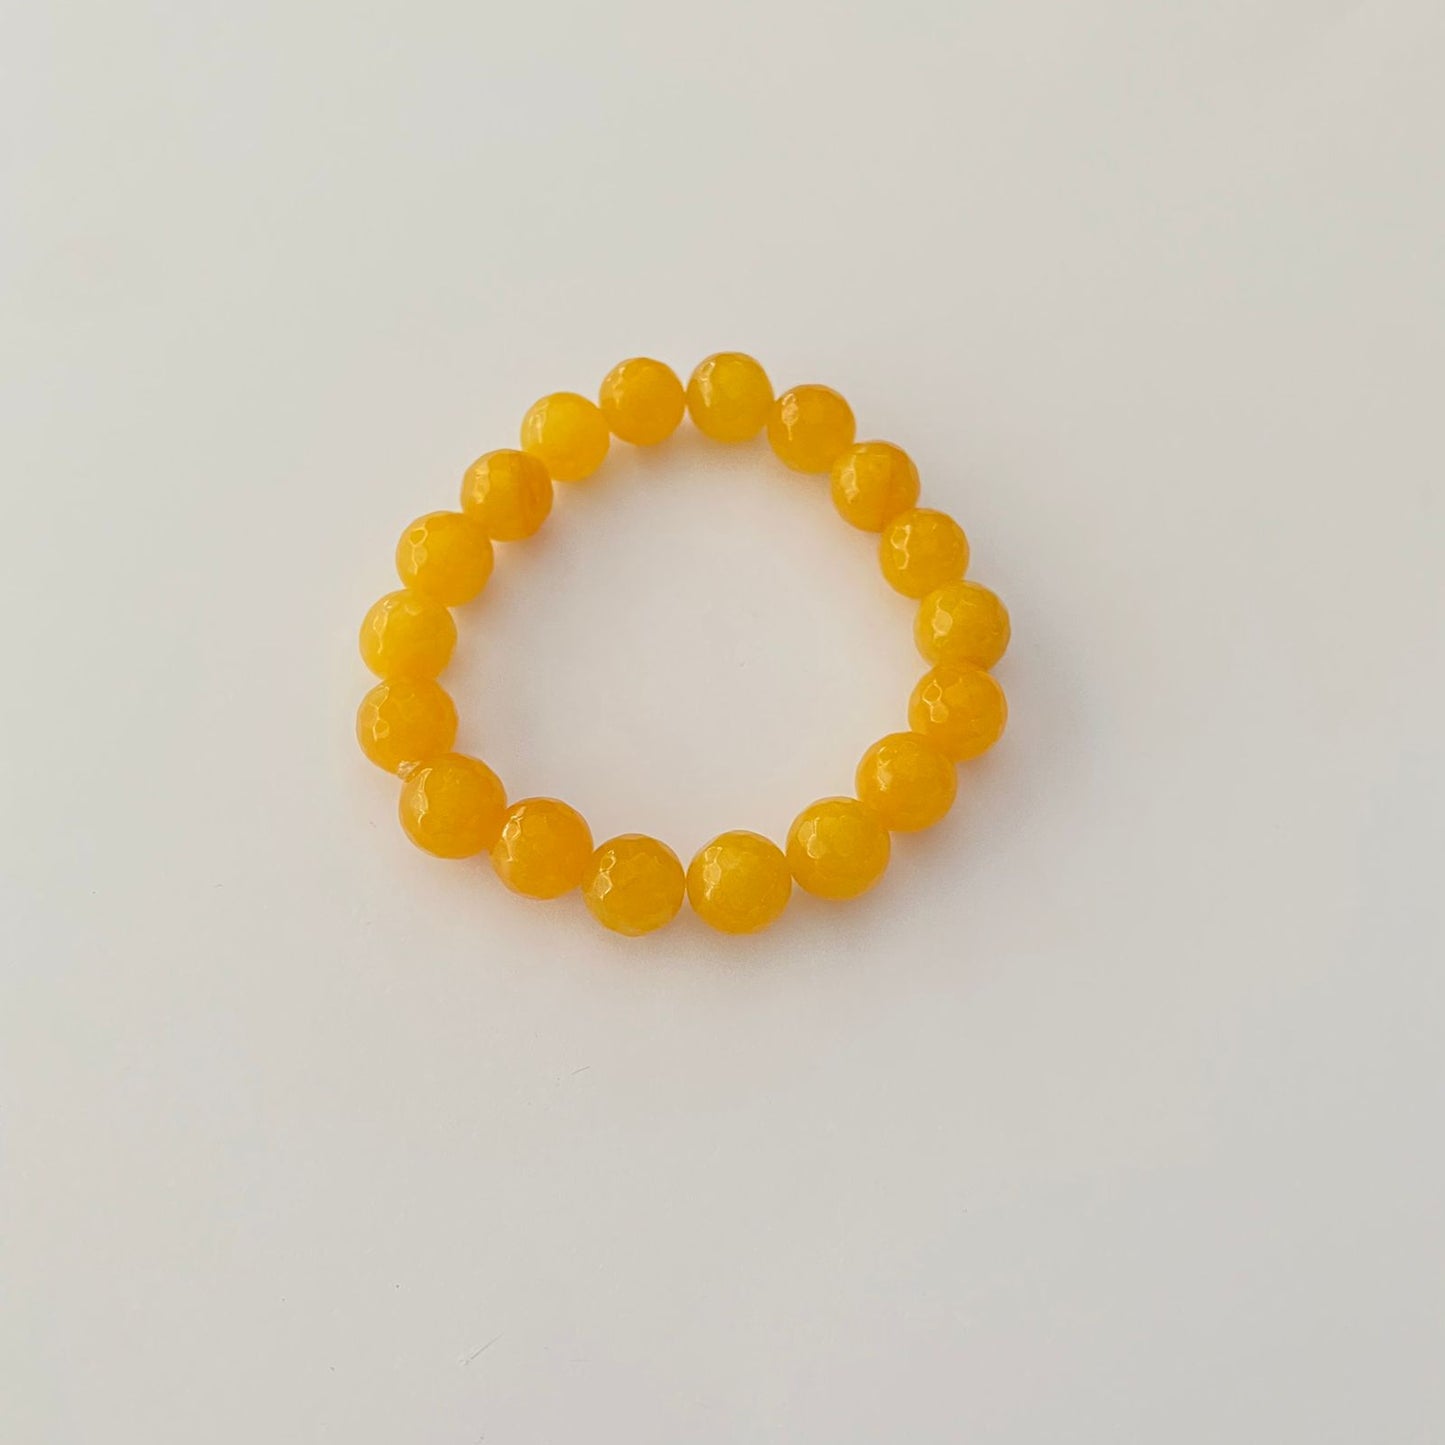 Yellow Opal Stone Bracelet